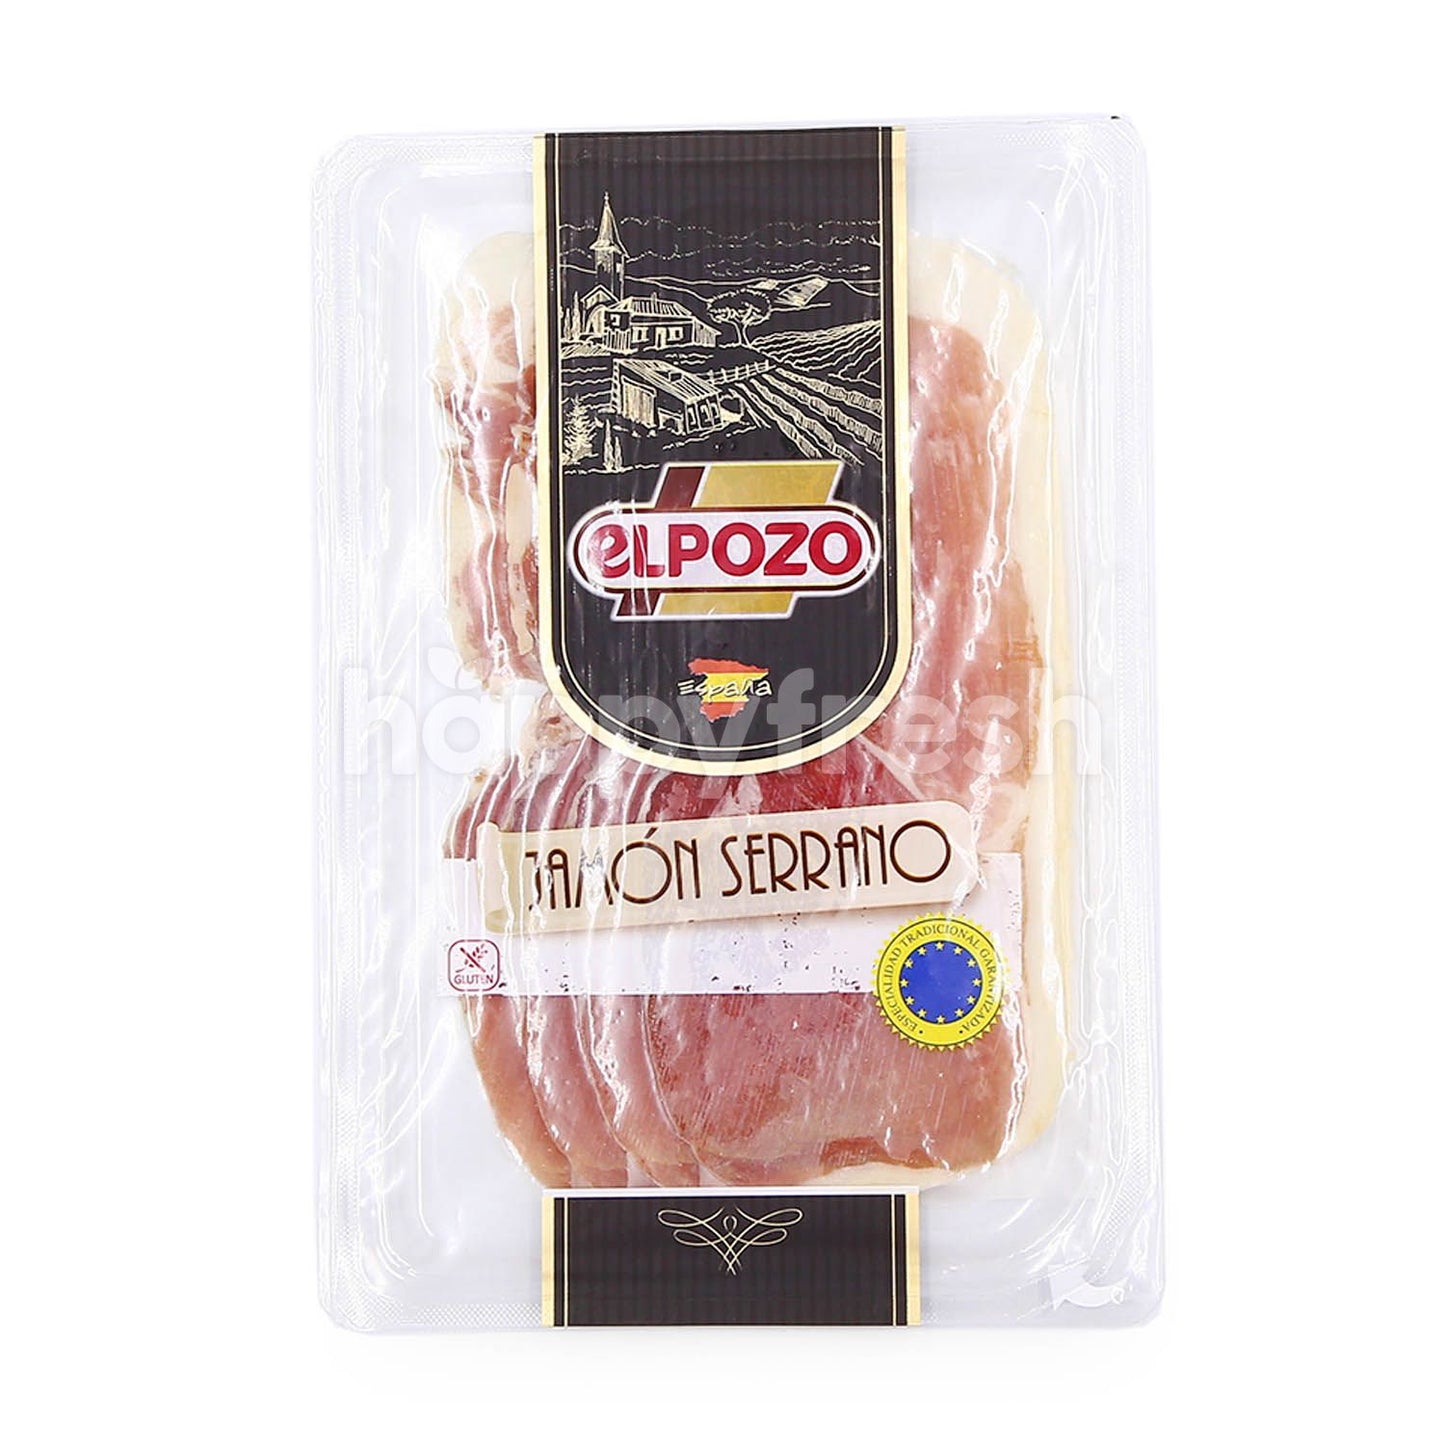 Elpozo Serrano Ham Pre-Sliced